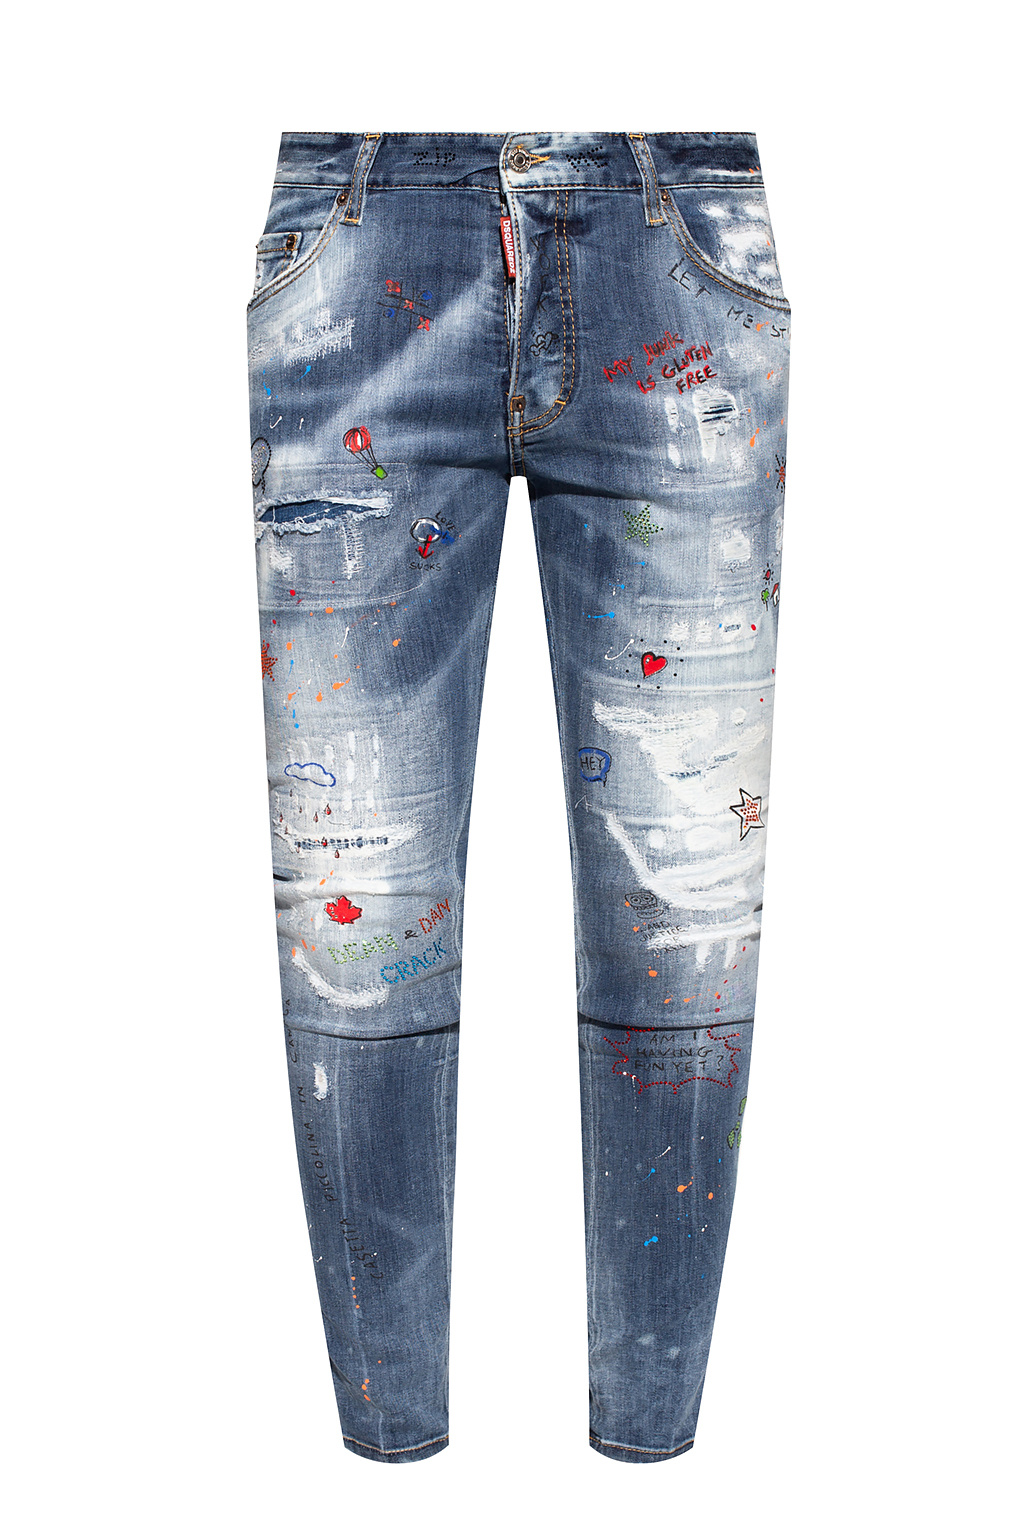 Dsquared2 'Super Twinky Jean' jeans | Men's Clothing | IetpShops 